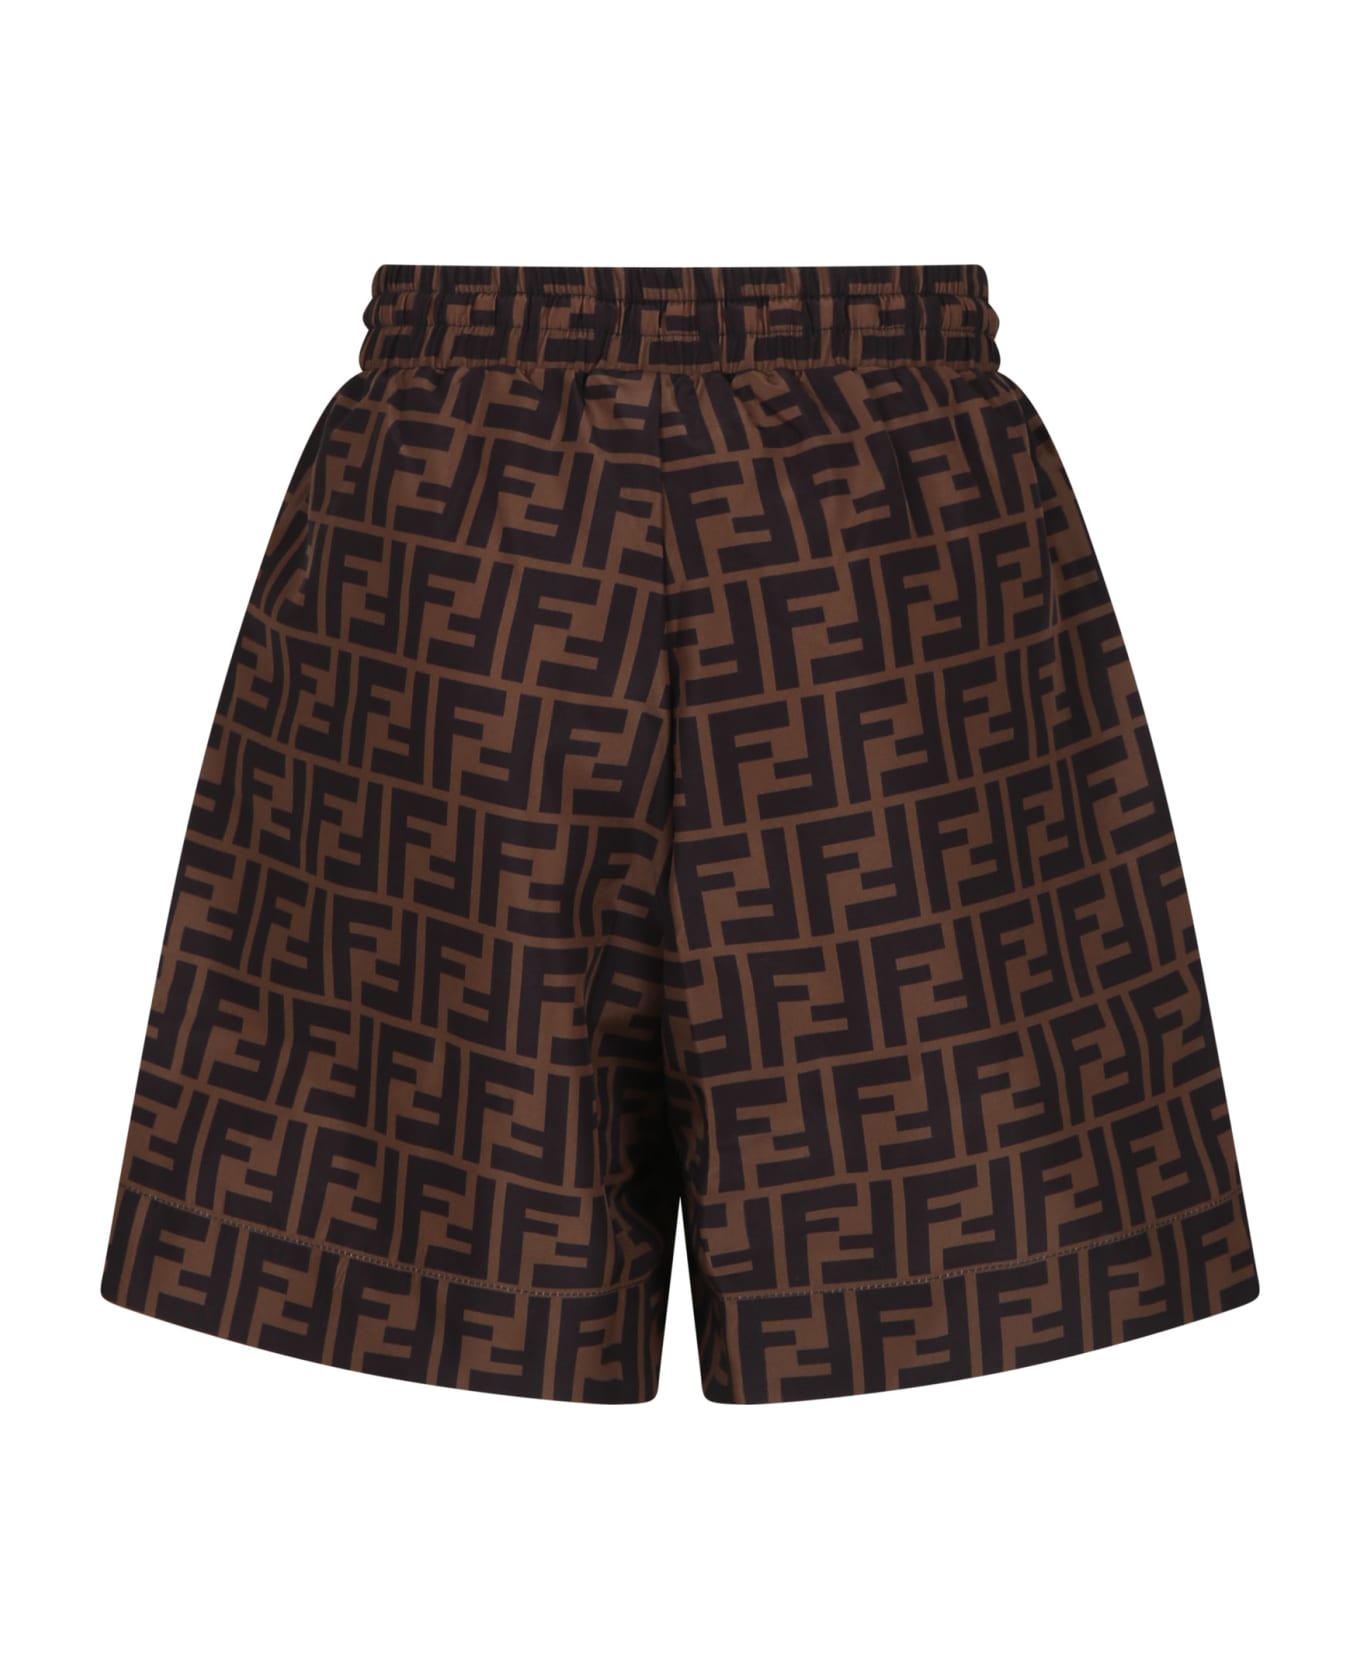 Fendi Brown Swim Shorts For Boy With Iconic Ff And Fendi Logo - Marrone 水着